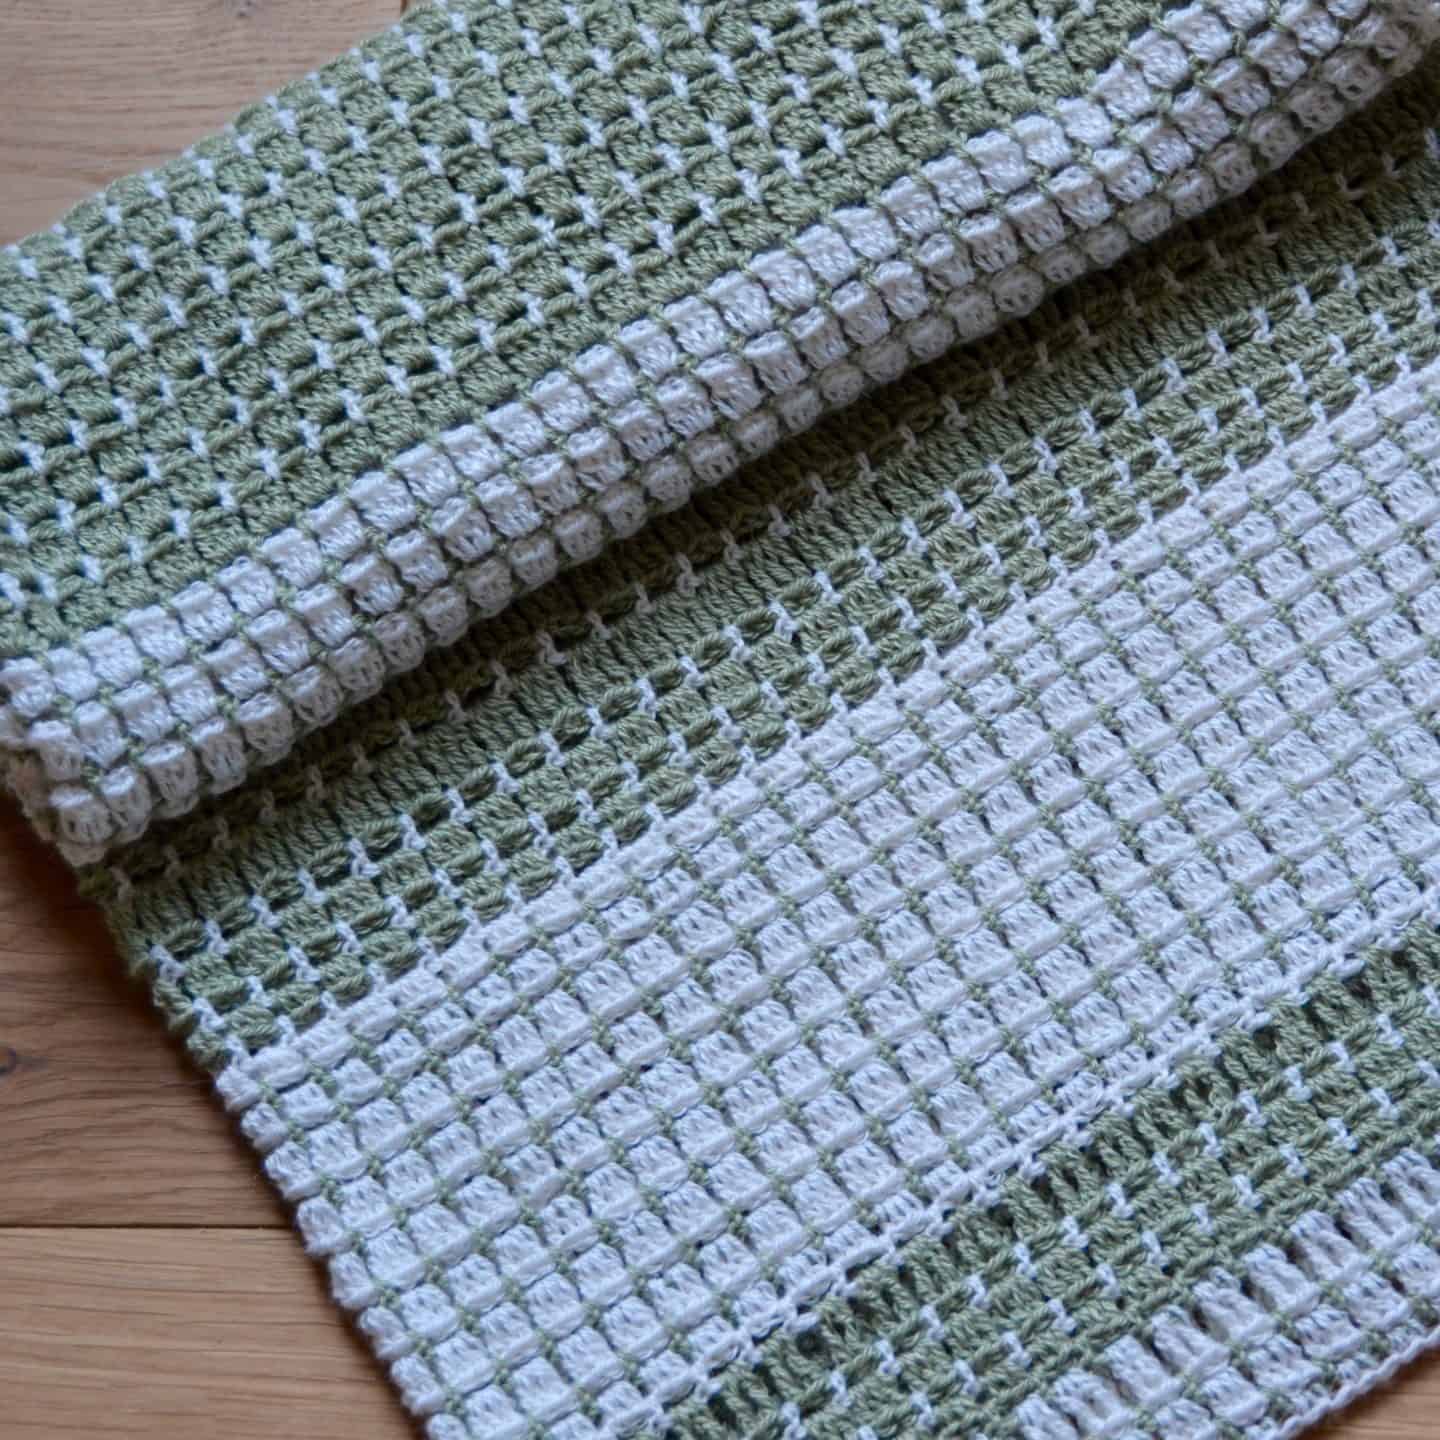 Granny Block Stitch Crochet Blanket in Green and White.